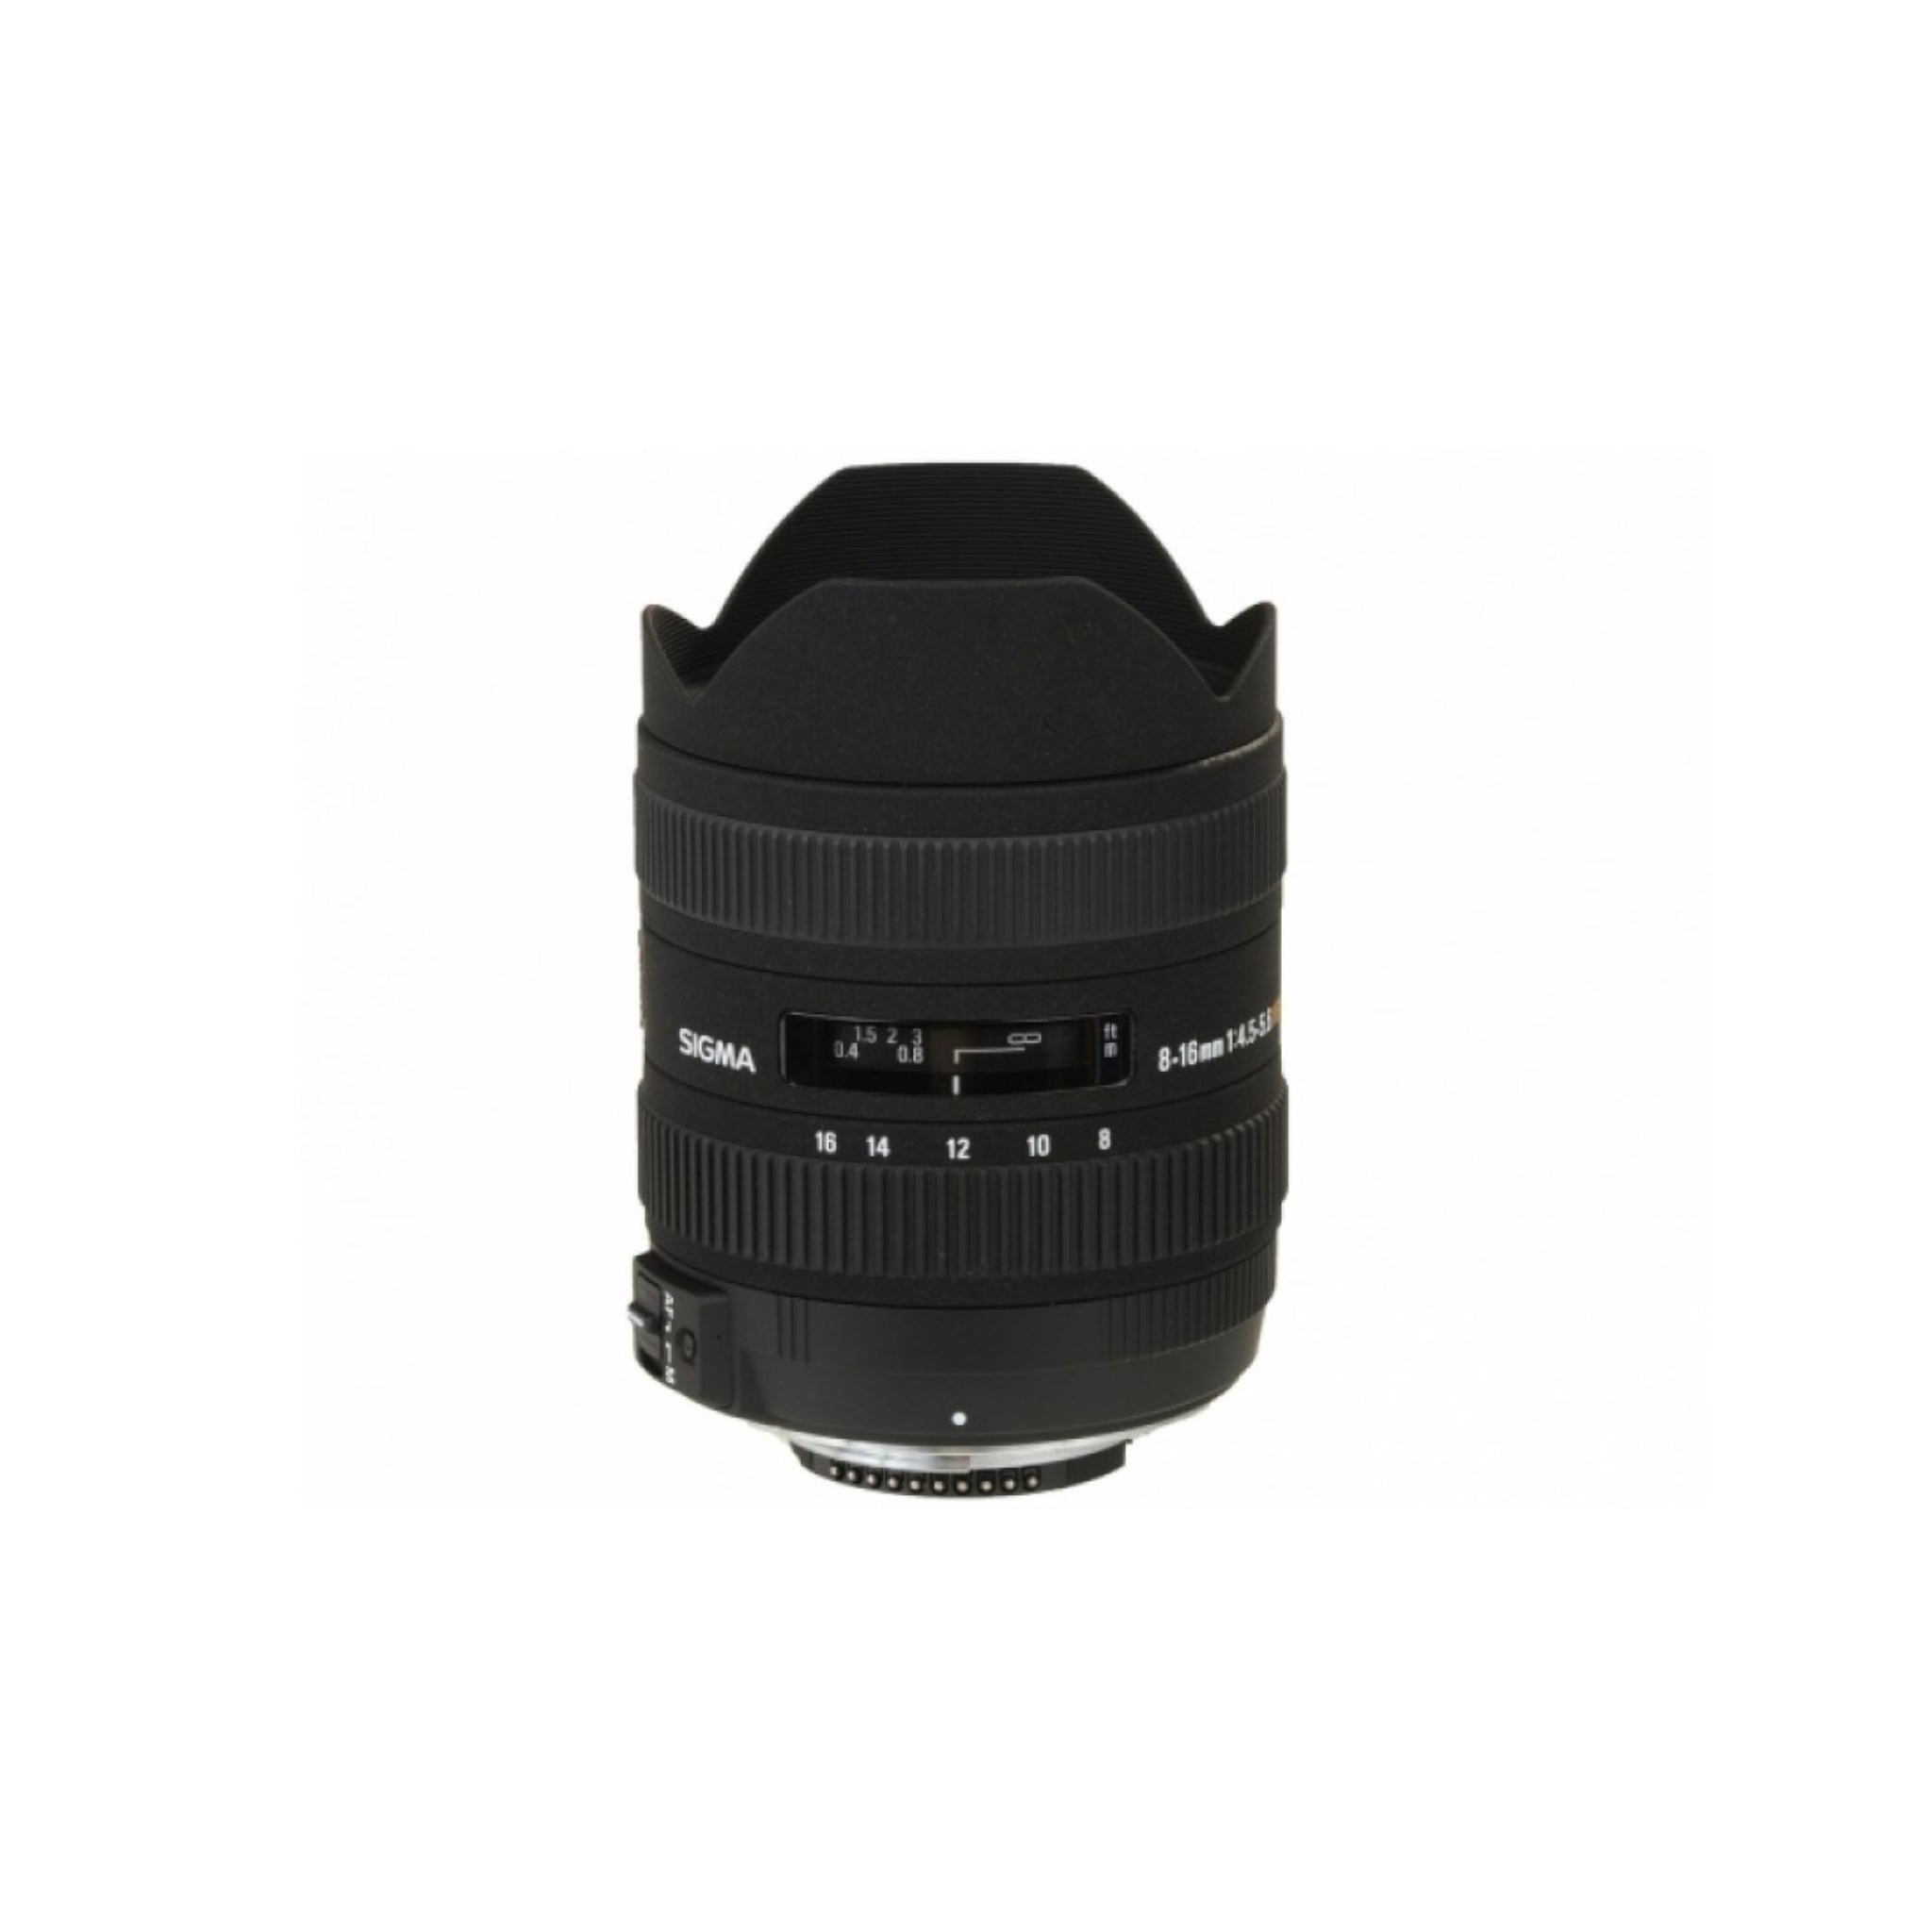 Sigma 8-16mm f4.5-5.6 DC HSM Art (Nikon mount) Lens